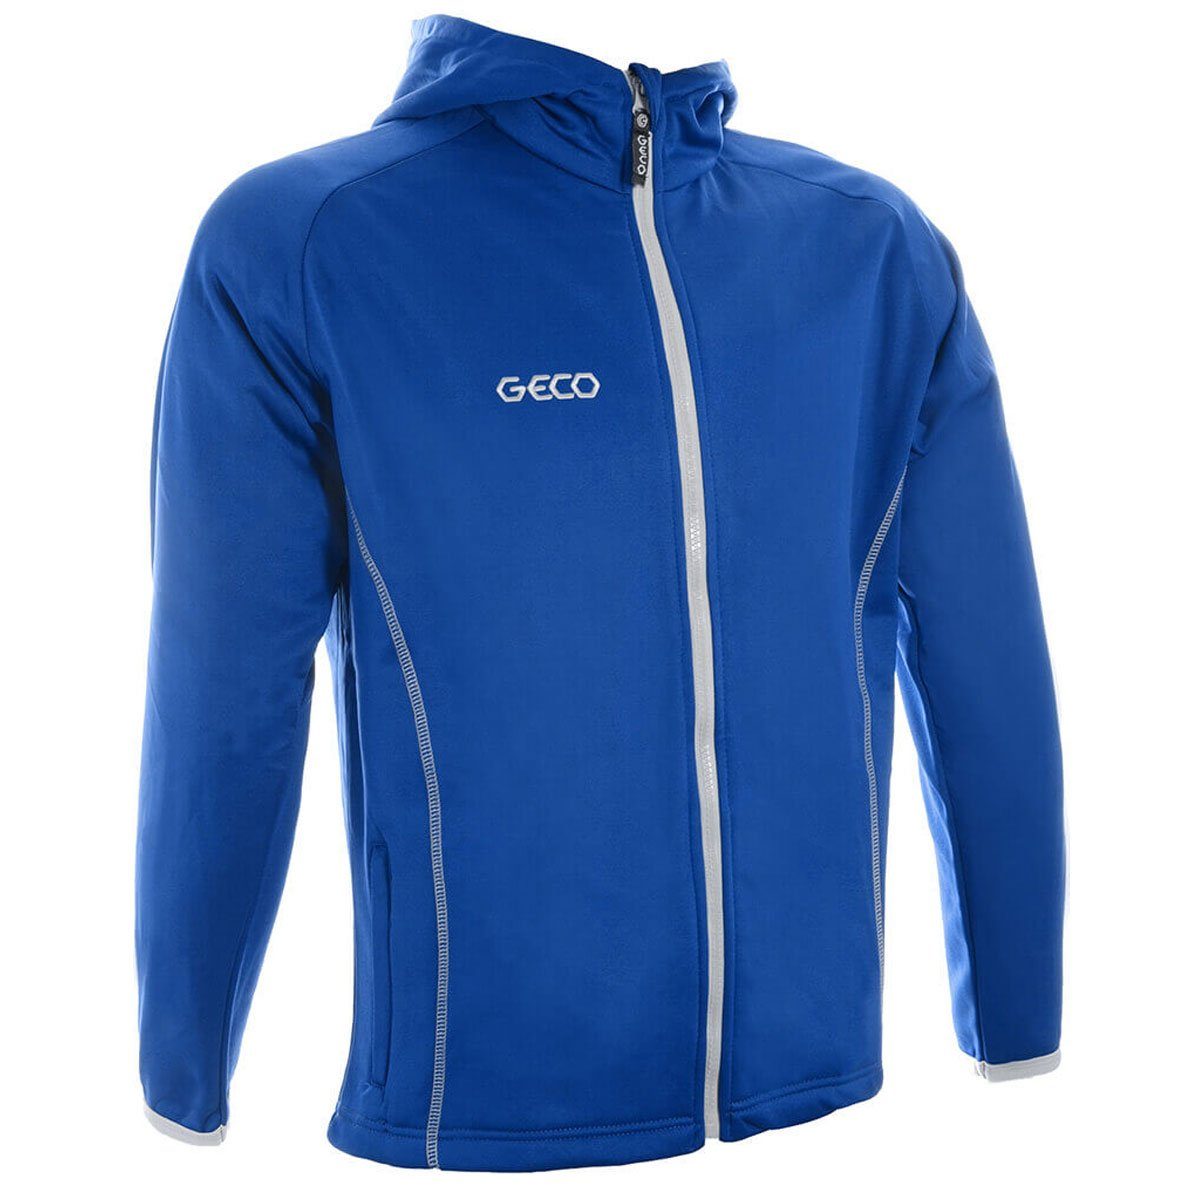 Hurrican blau mit Sportswear Trainingsjacke Trainingsjacke Geco Kapuze Präsentationsjacke Geco Fußball